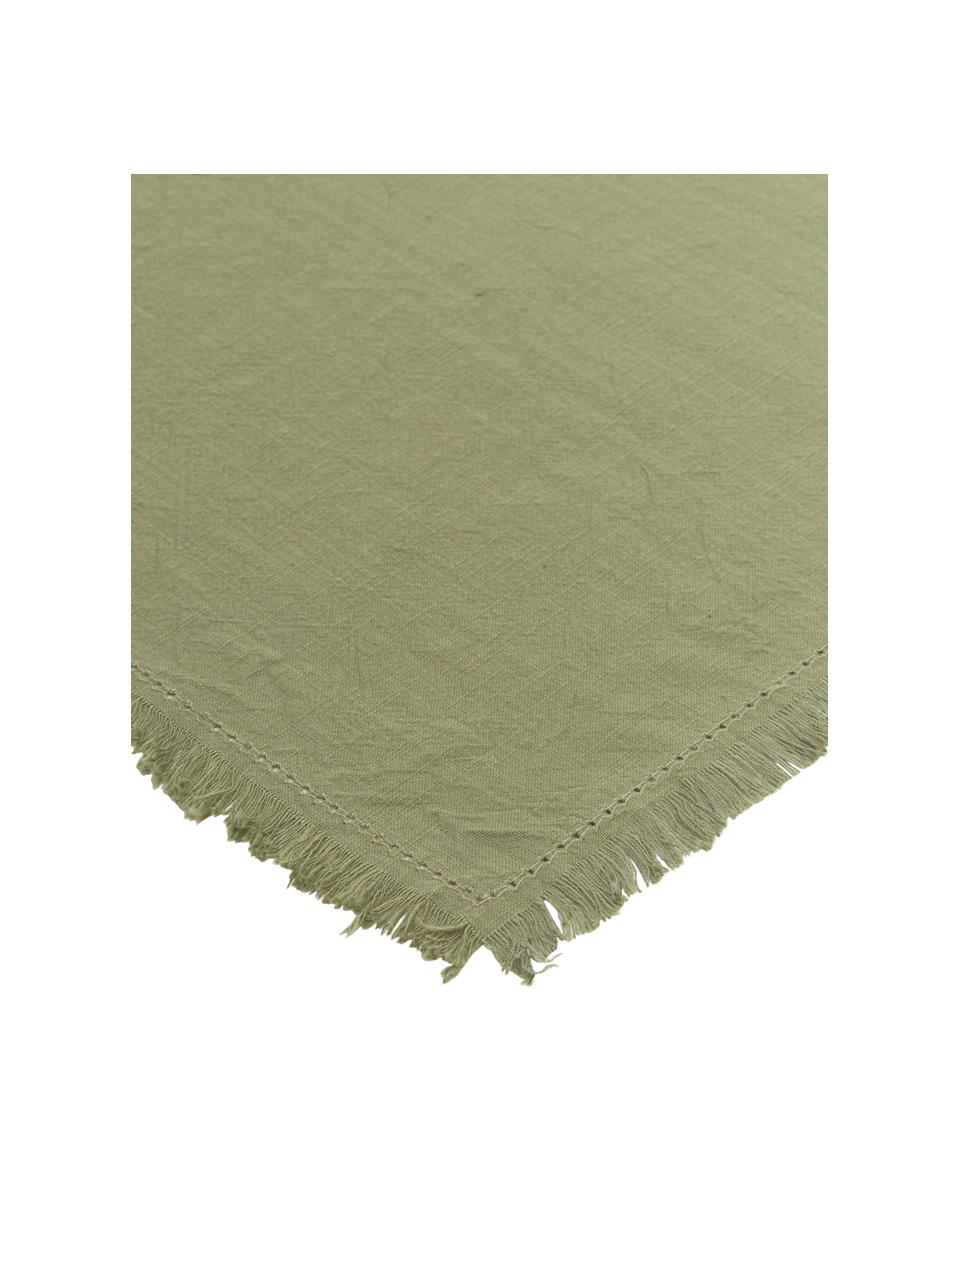 Servilletas de algodón Hilma, 2 uds., Algodón, Verde oliva, L 31 cm